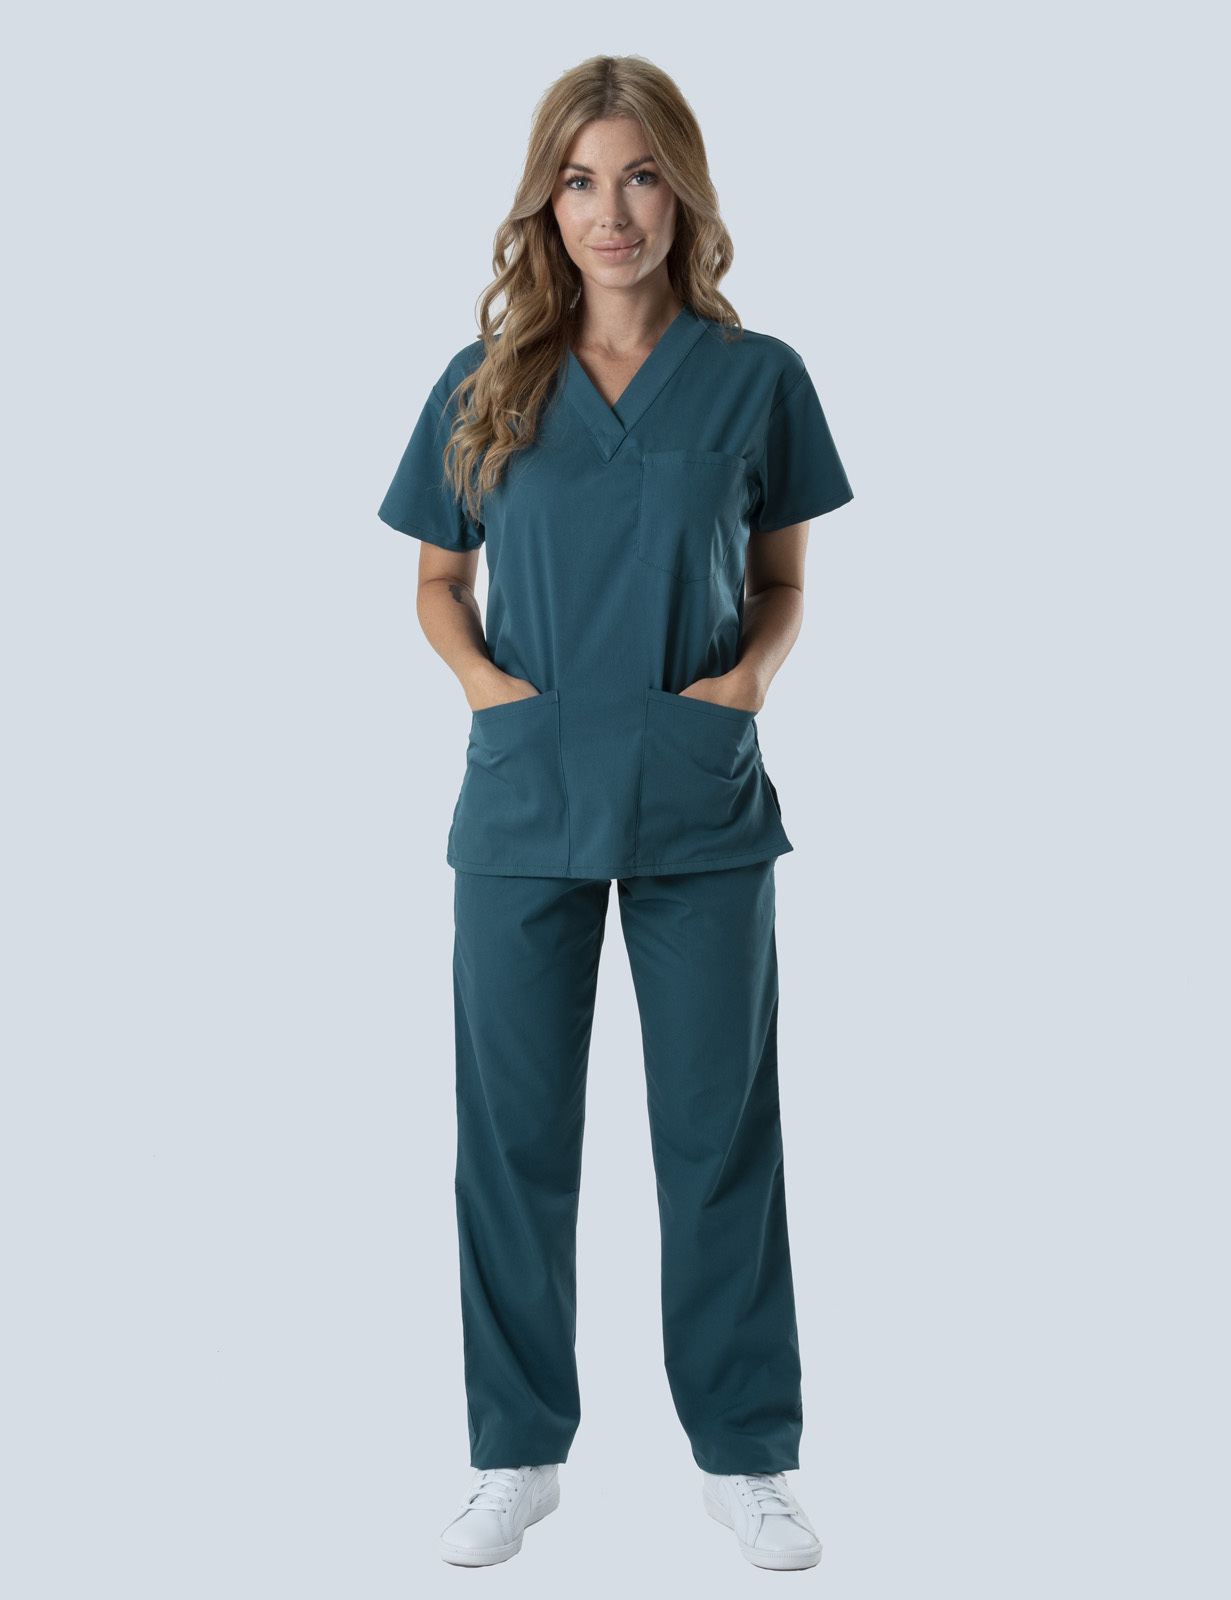 Vet24 - Trainee Nurse (4 Pocket Scrub Top and Regular Pants in Caribbean incl Logos)